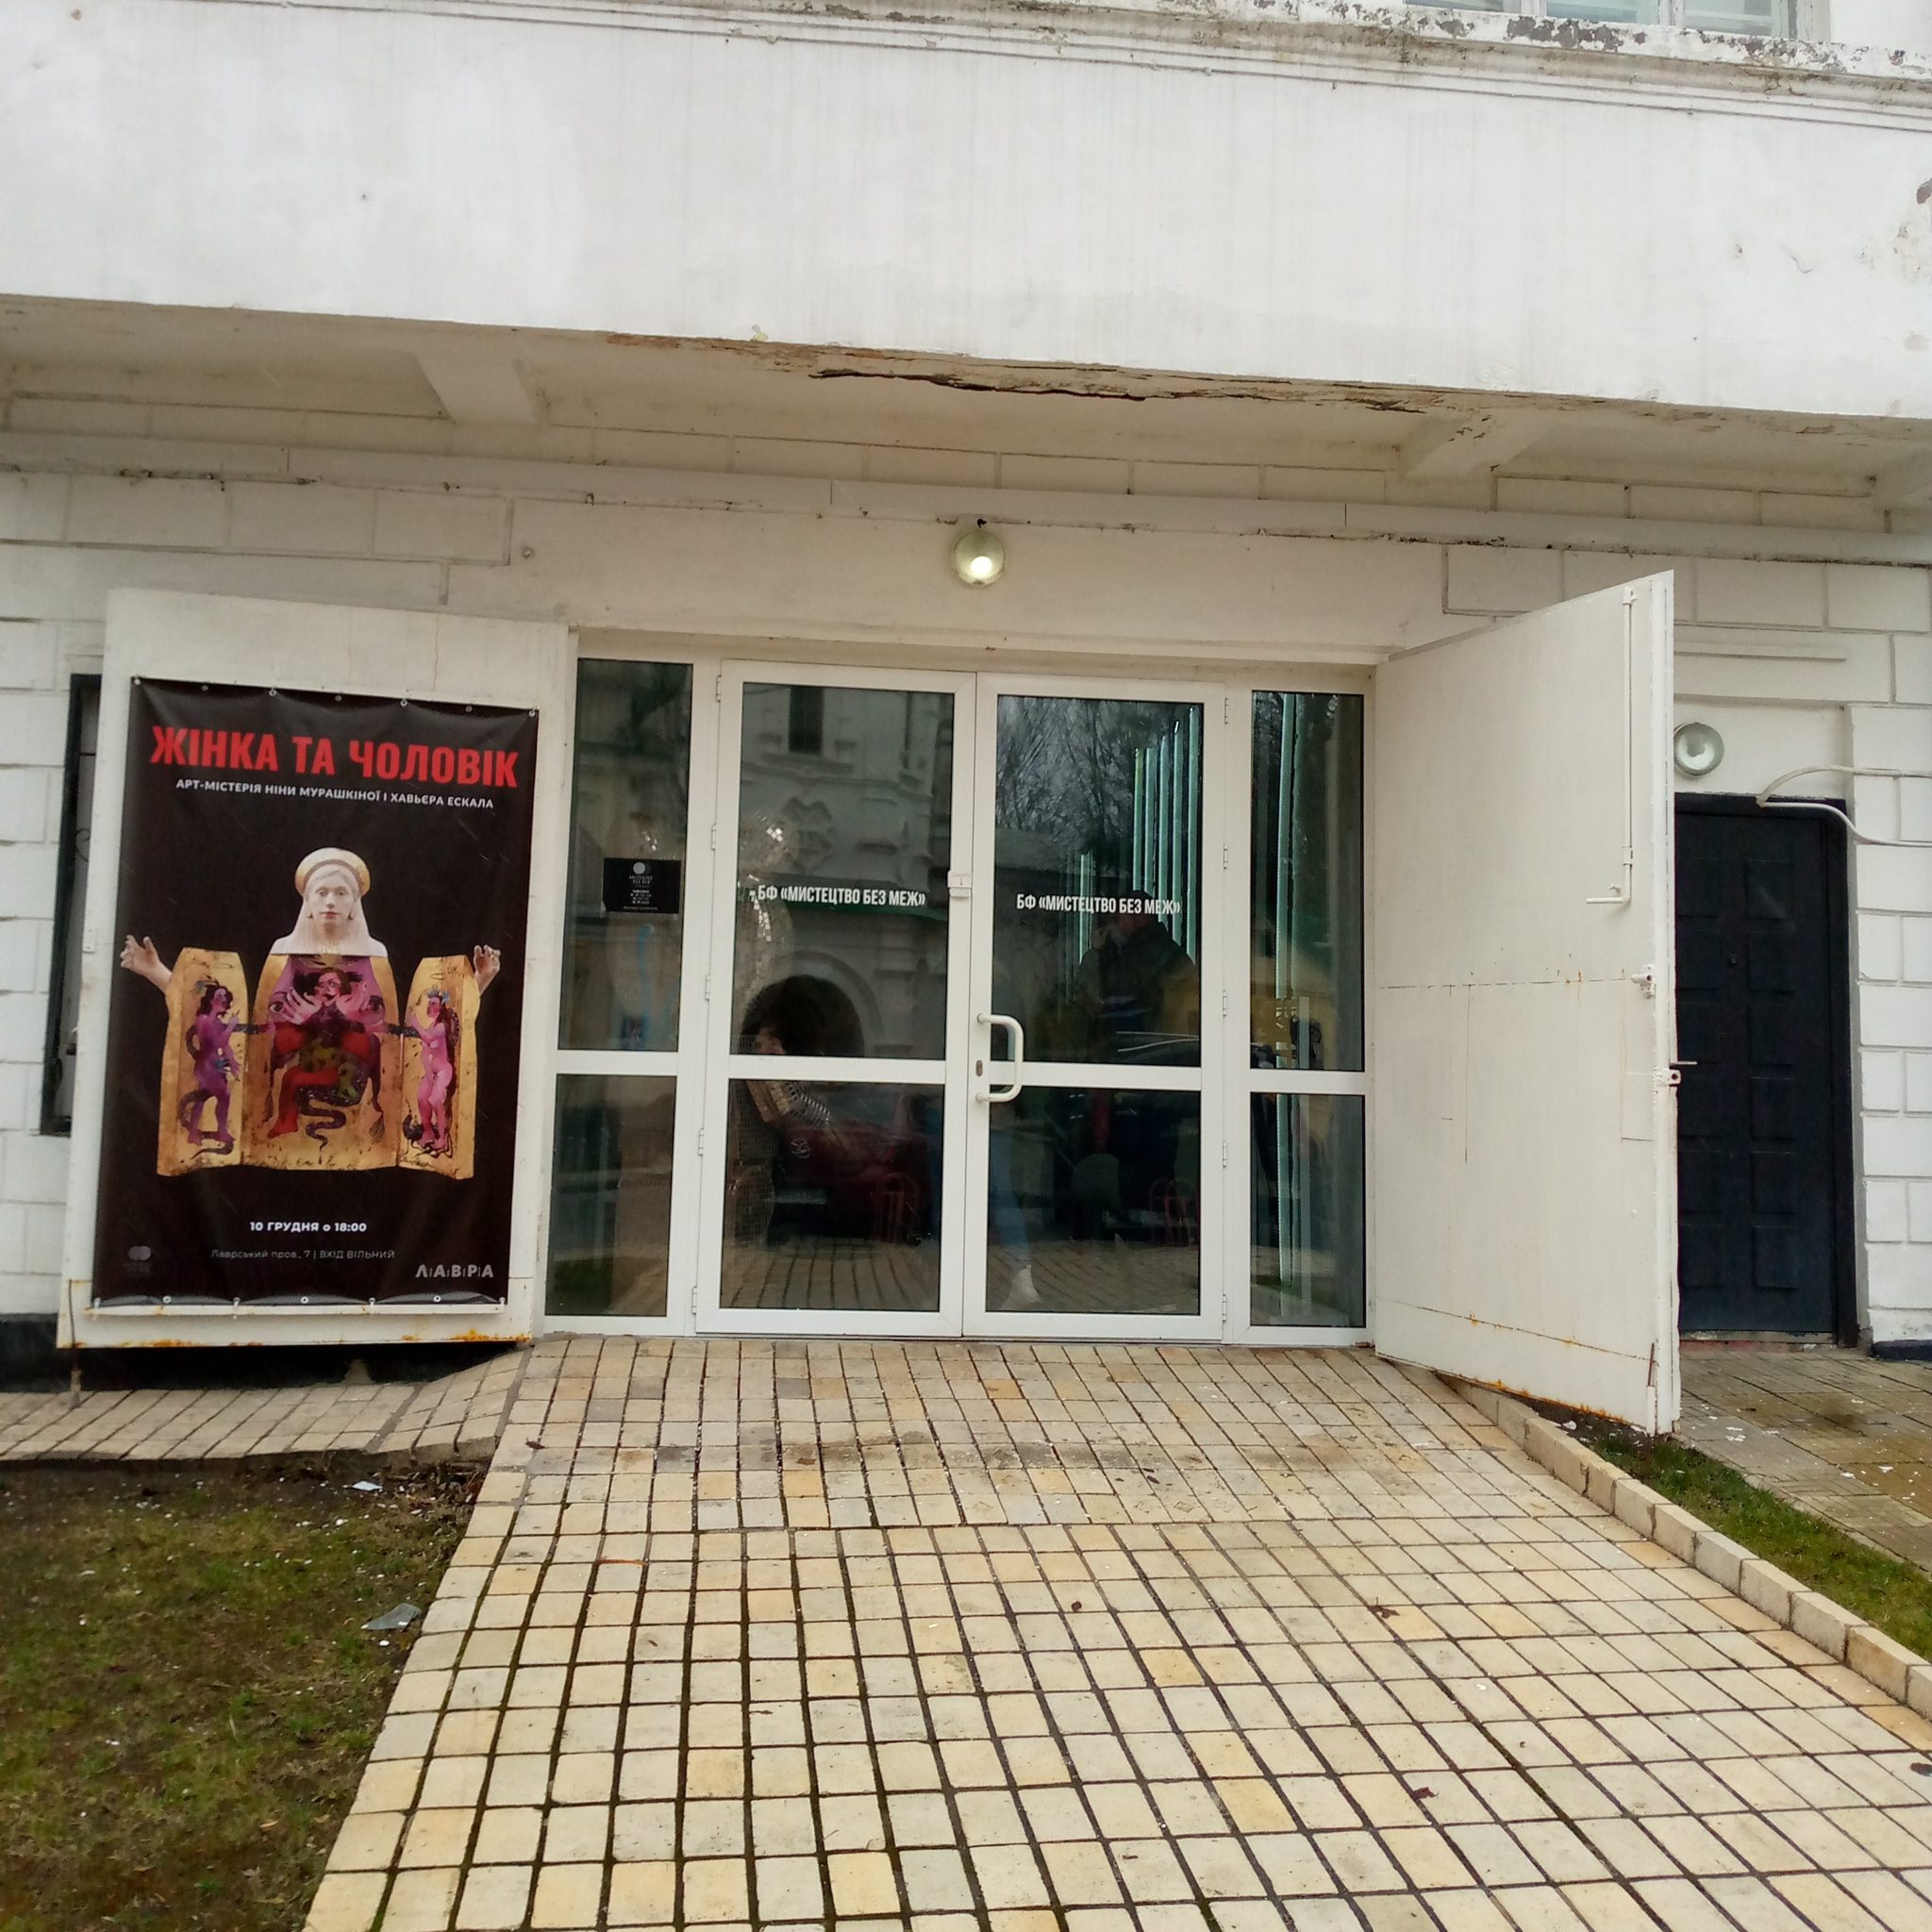 Mironova Gallery, a Driving Force for the Development of Ukrainian Art